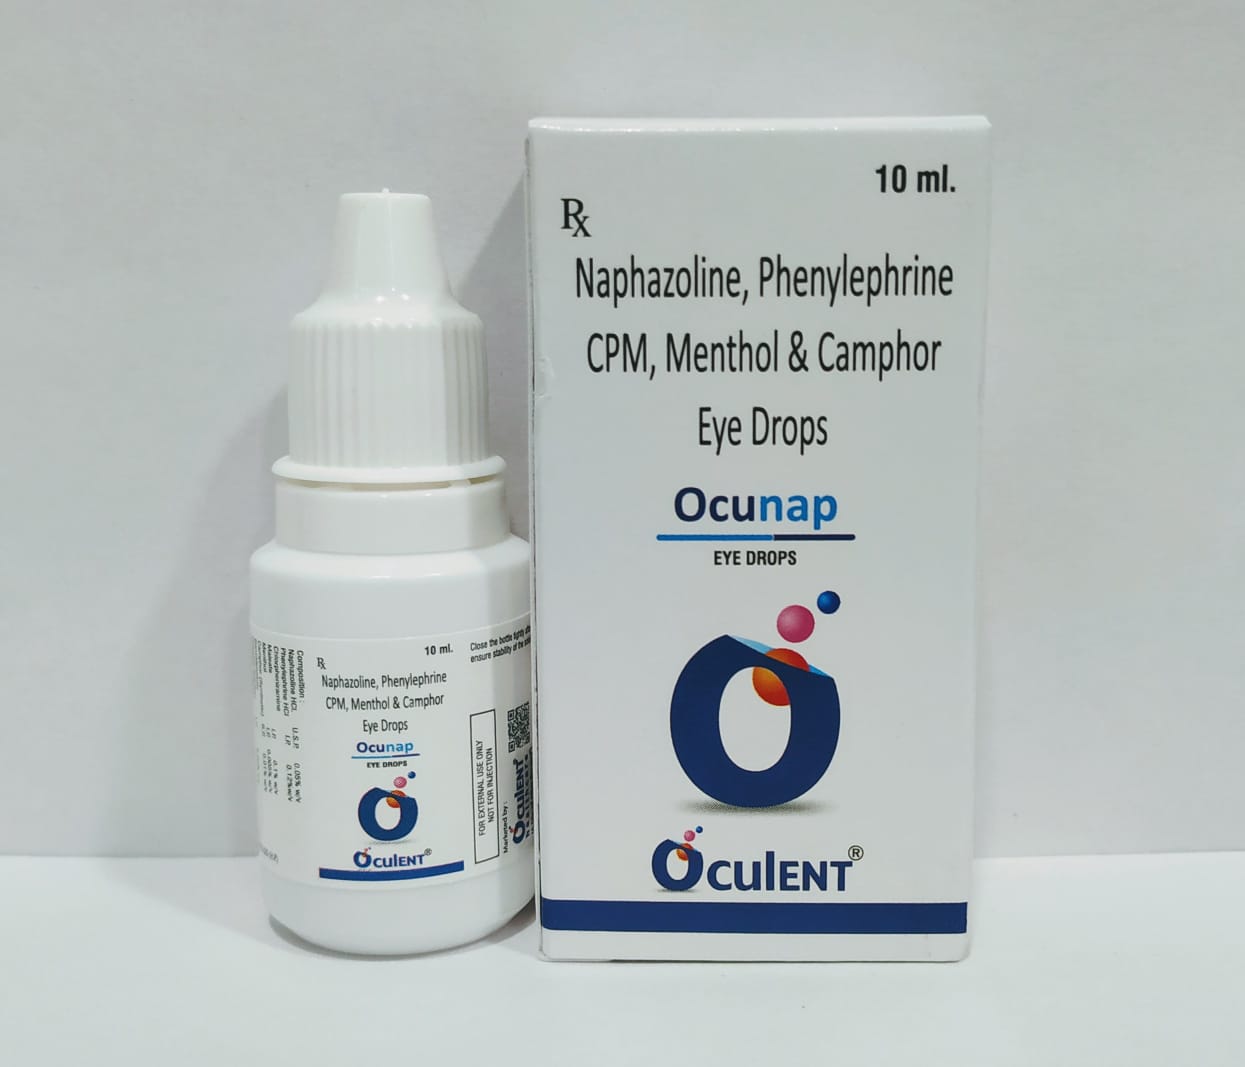 Ophthalmic PCD Pharma Franchise Company